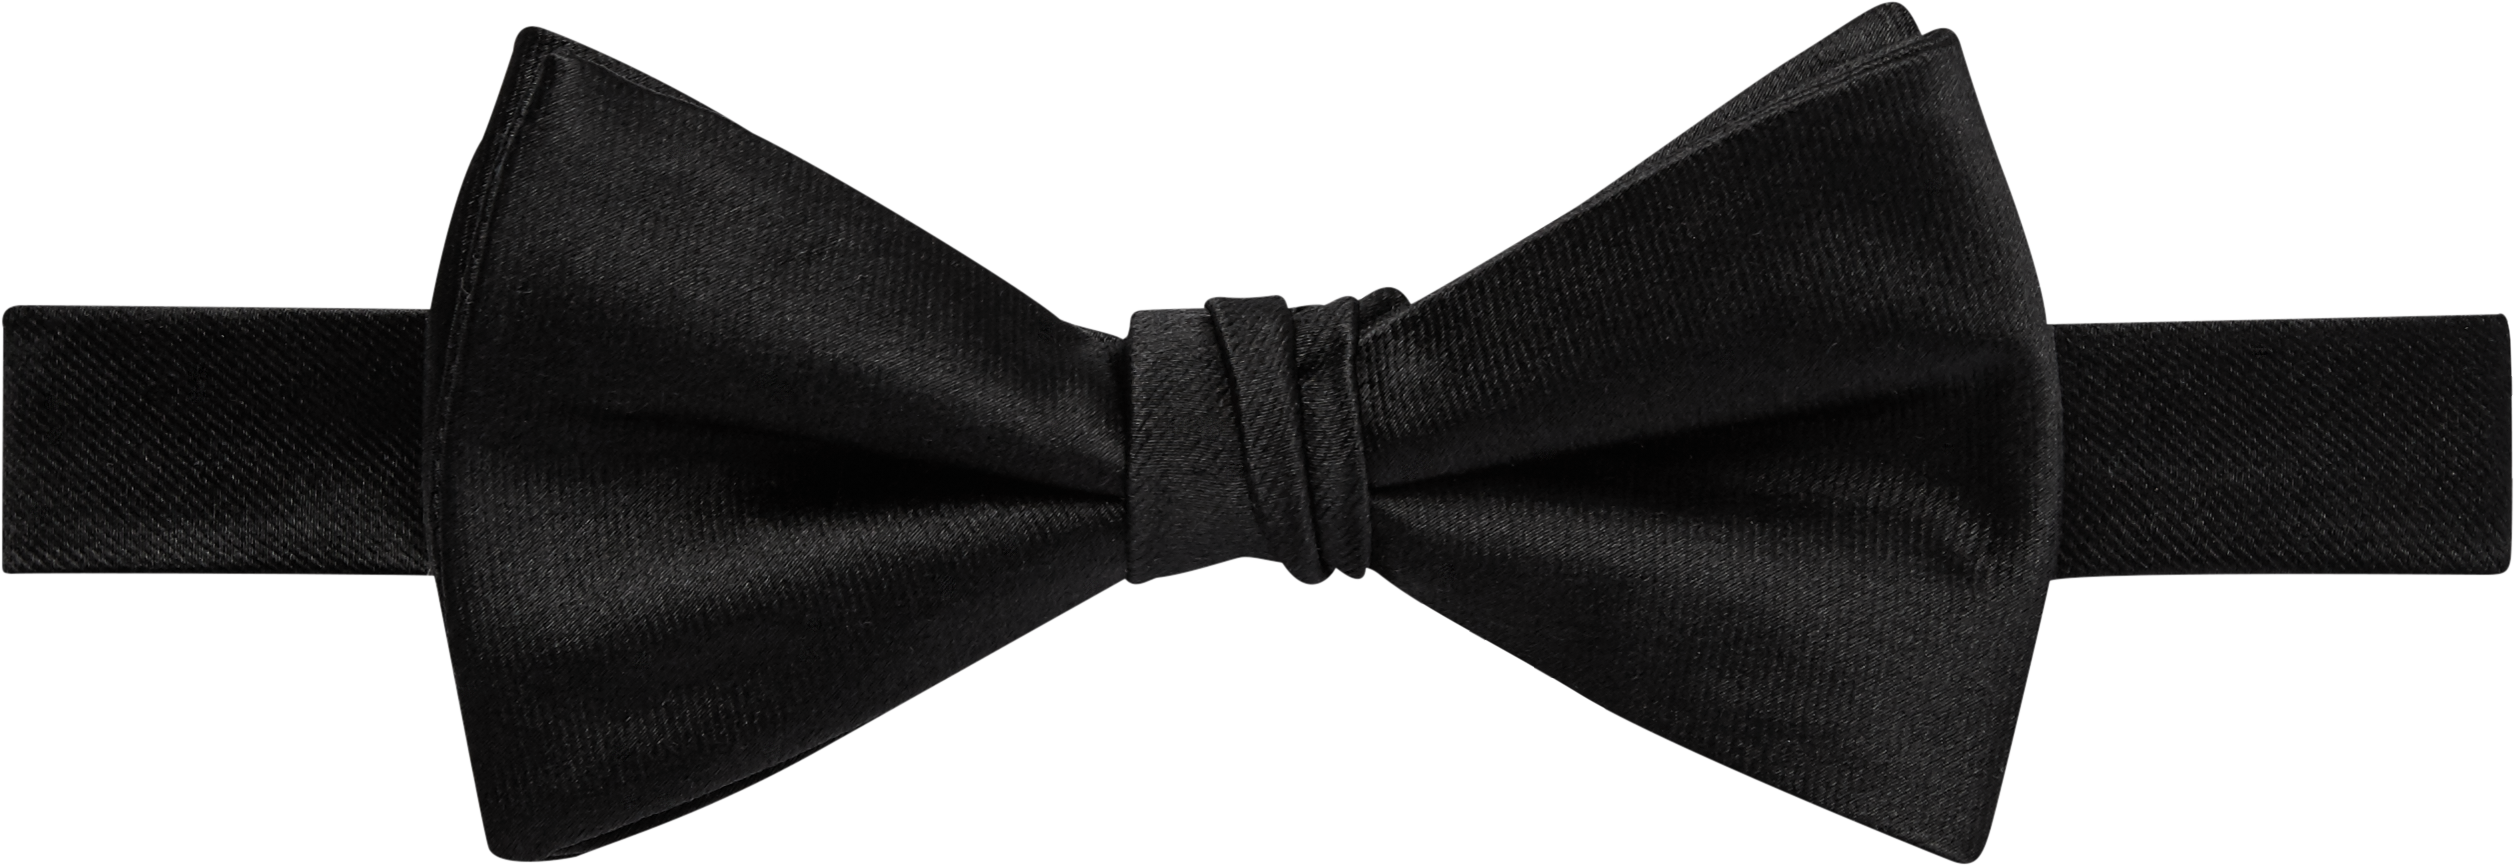 Joseph Abboud Pre-Tied Bow Tie | Formal Accessories| Men's Wearhouse